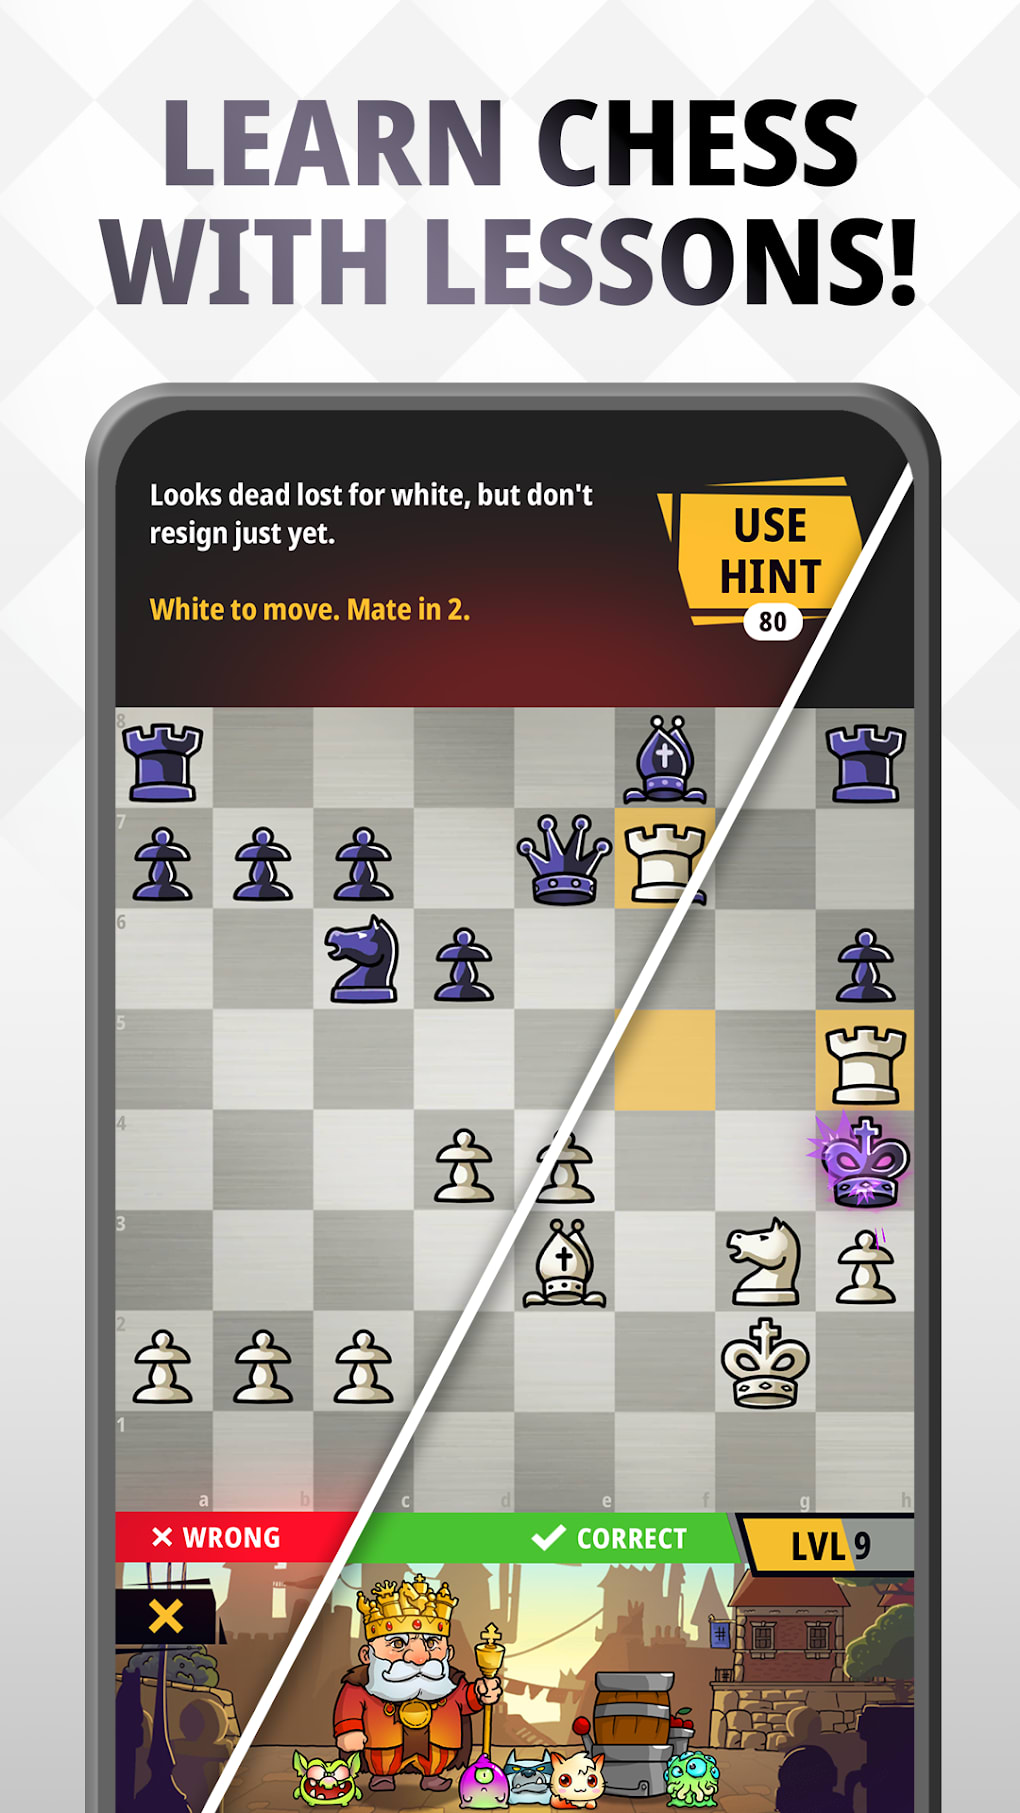 Toon Clash Chess: Xadrez para Windows Phone e Windows 10 com